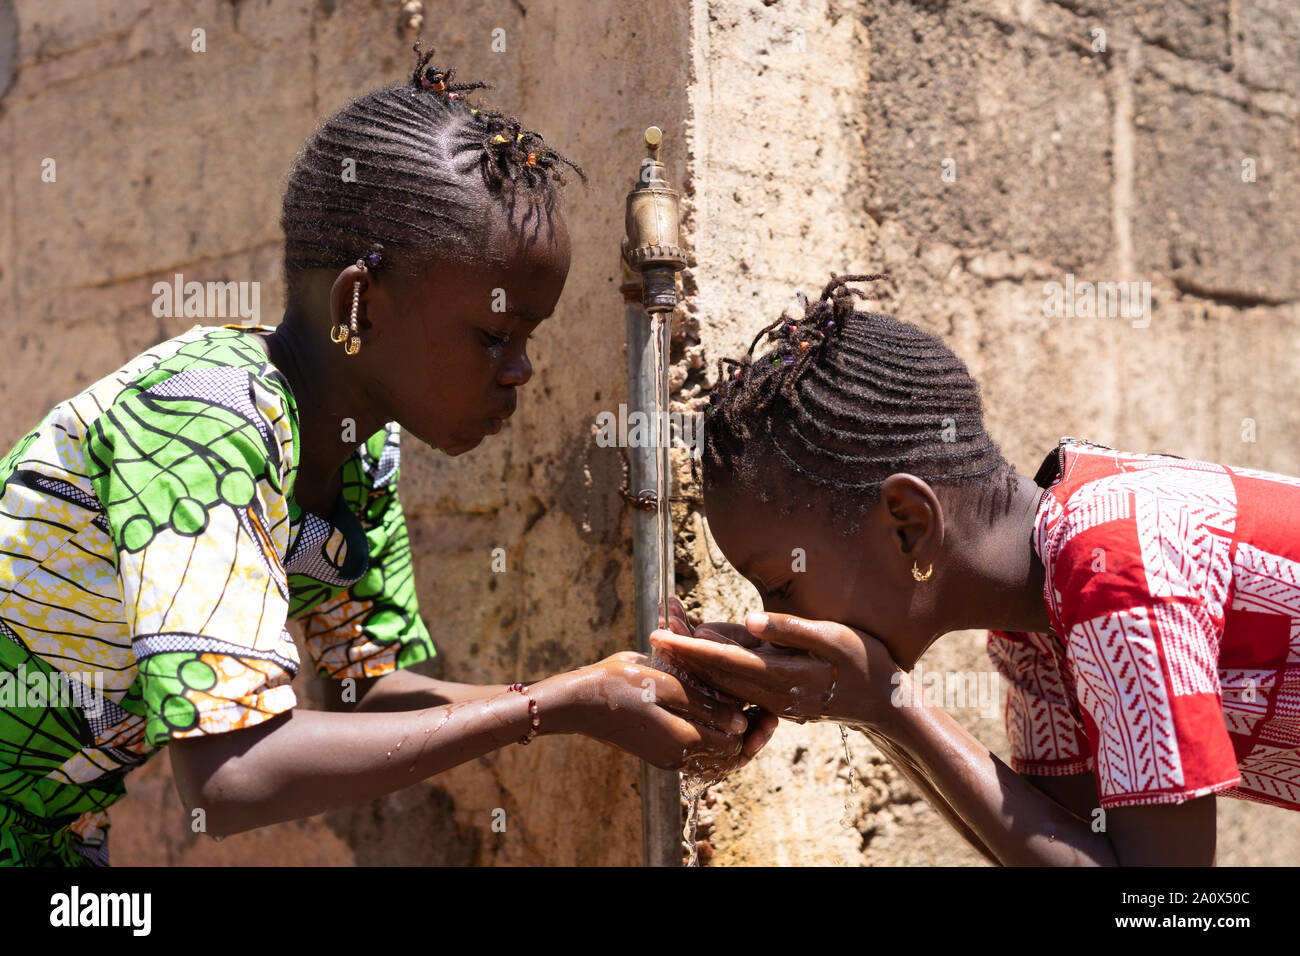 Water Crisis - African Women Finally Getting Fresh Water Stock Photo